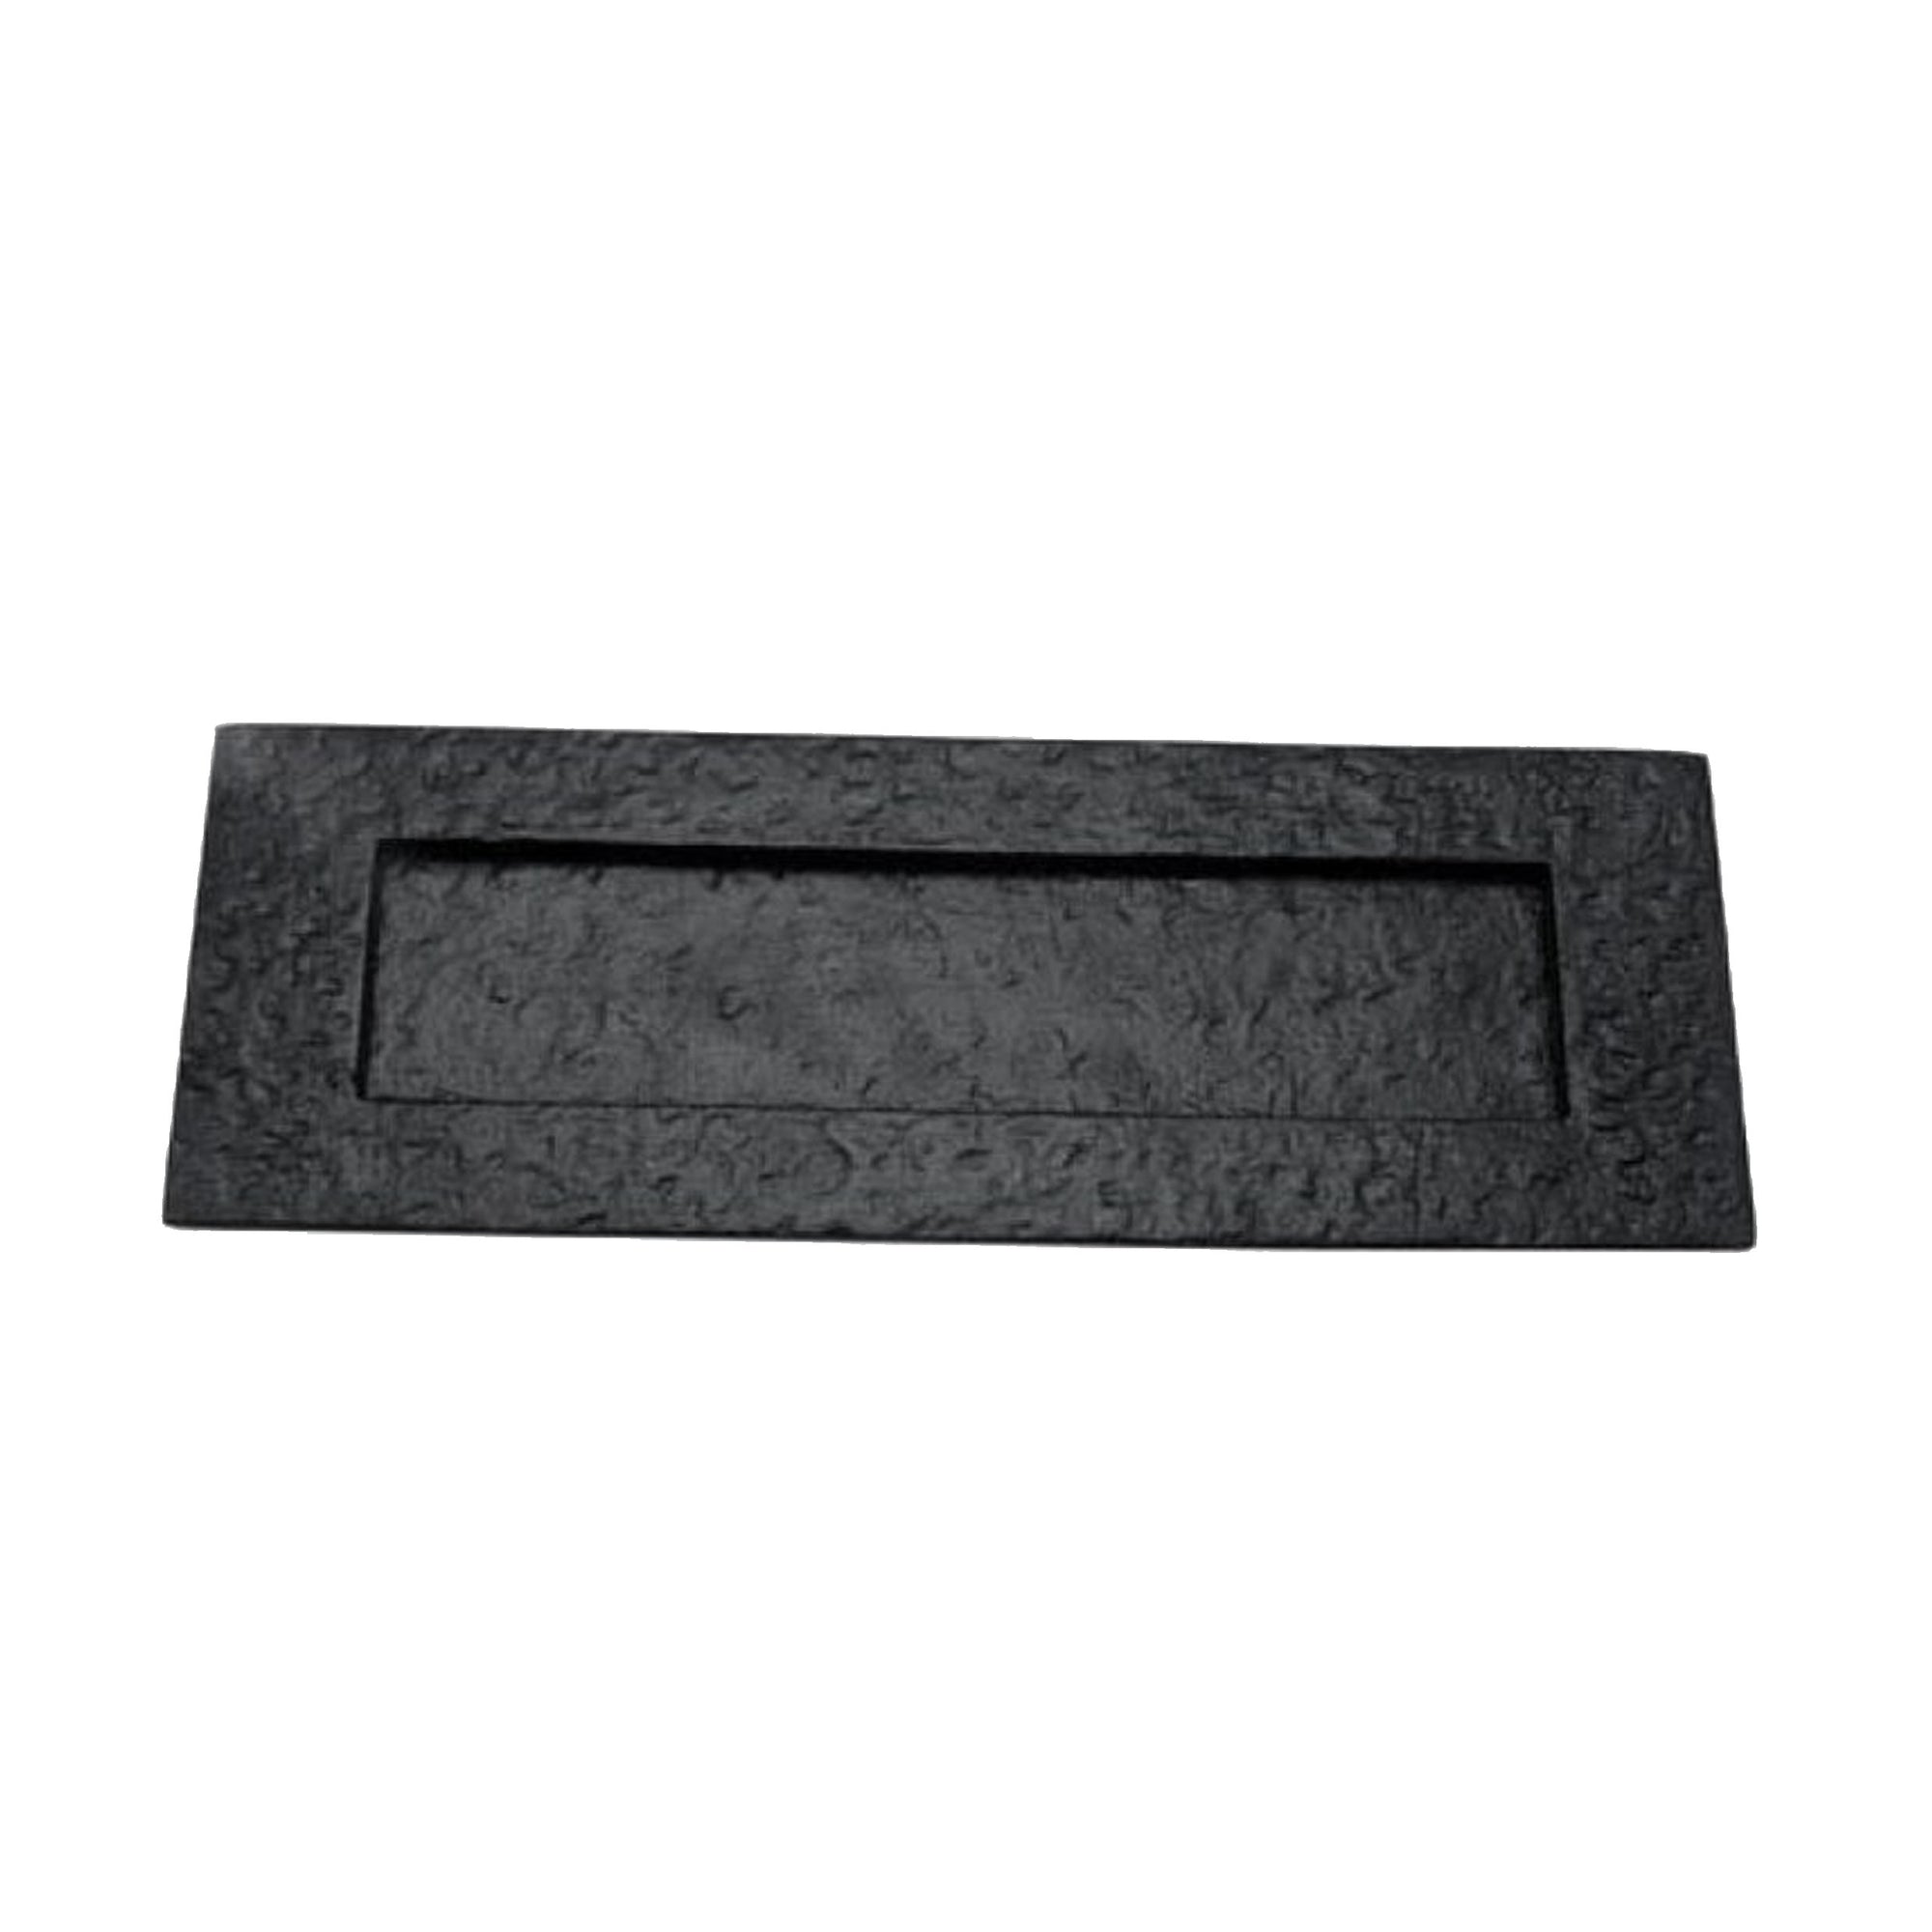 Cast Iron Plain Letter Plate - Black Powder Coated